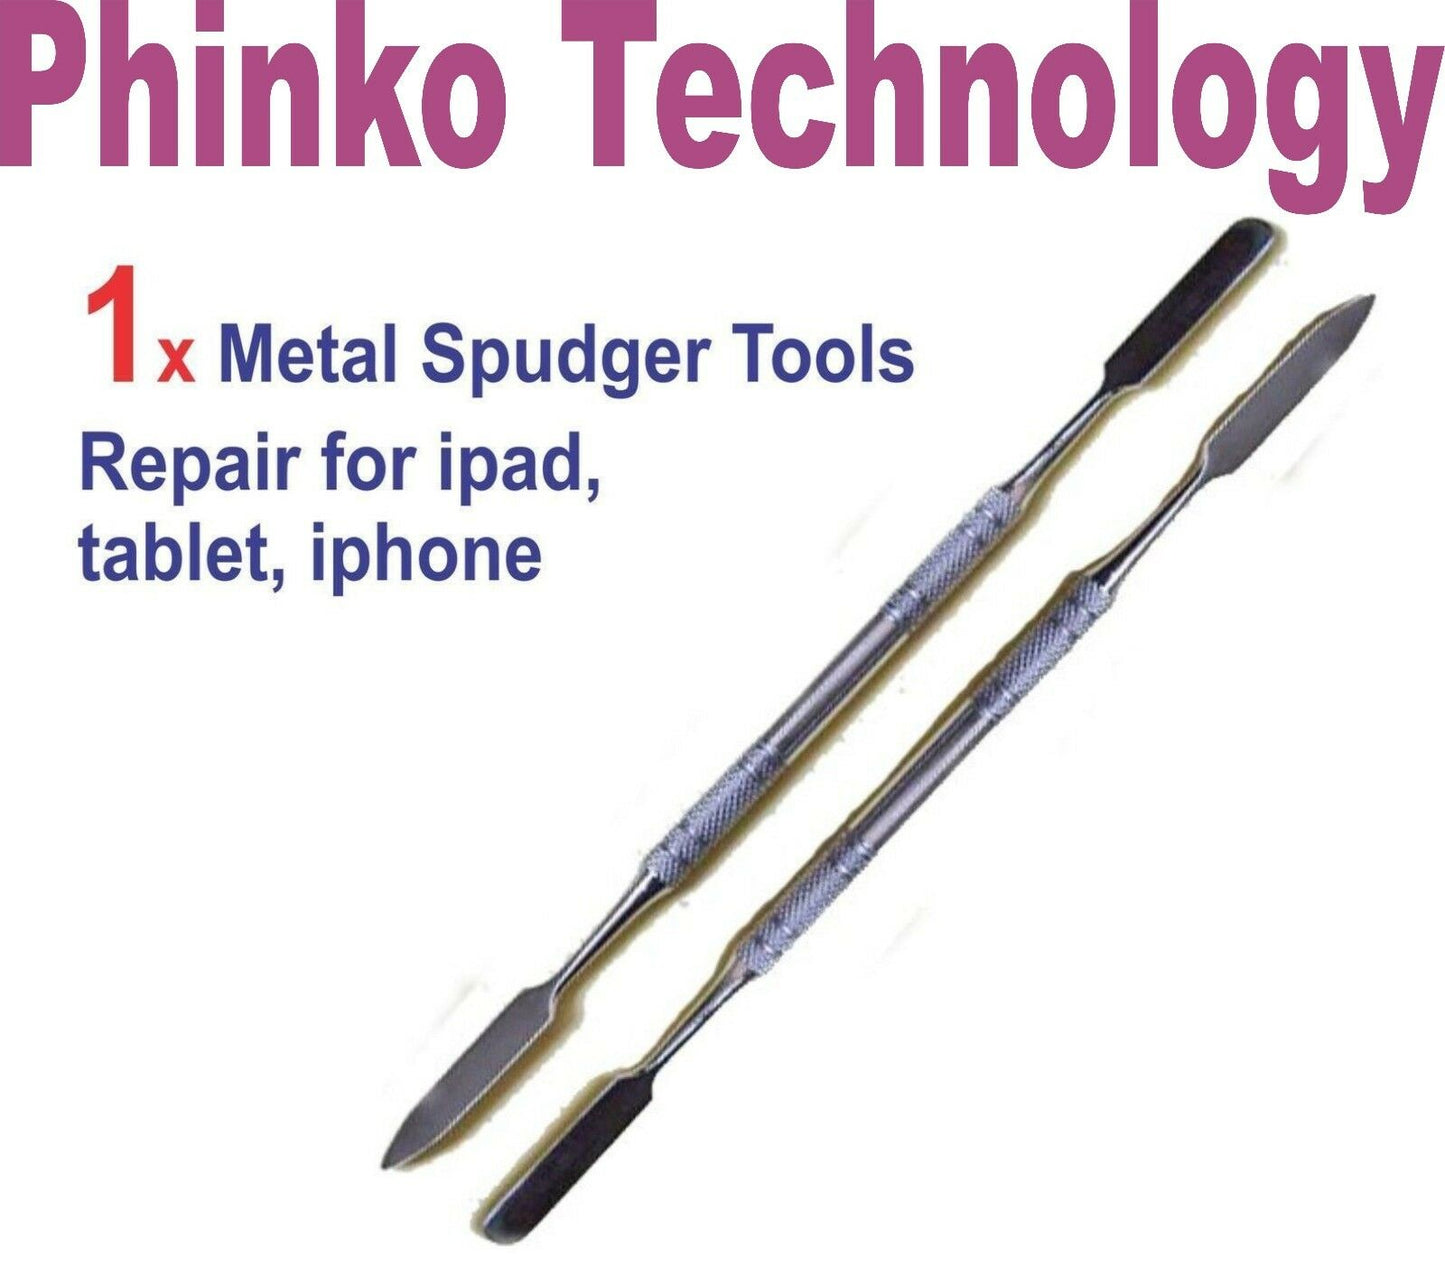 1x Aluminum Metal Spudger Tablet iPad iPhone iPod Samsung Repair Tool Kit